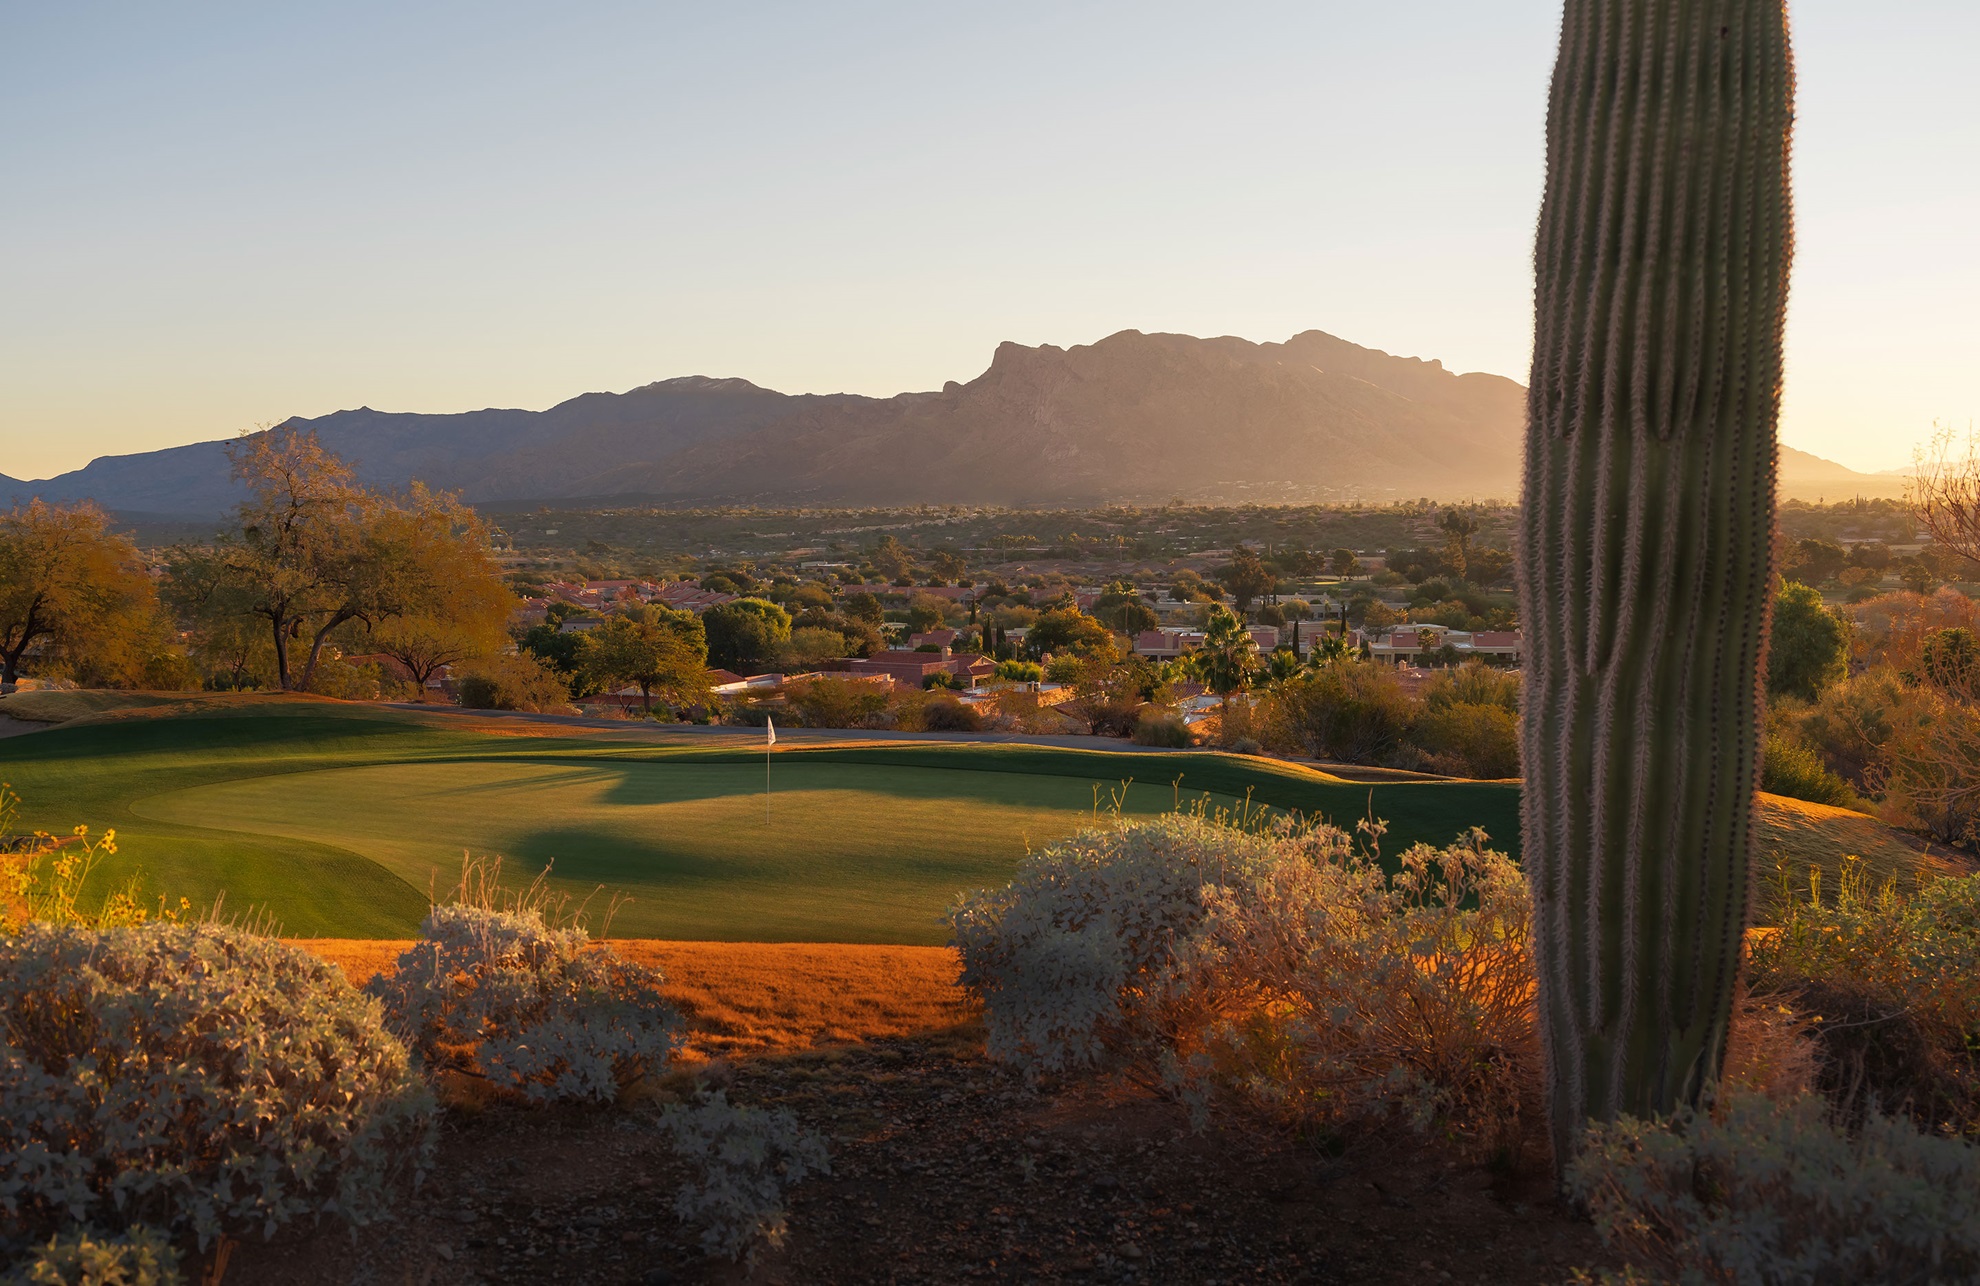 Sunset over desert golf course at Omni Tucson National